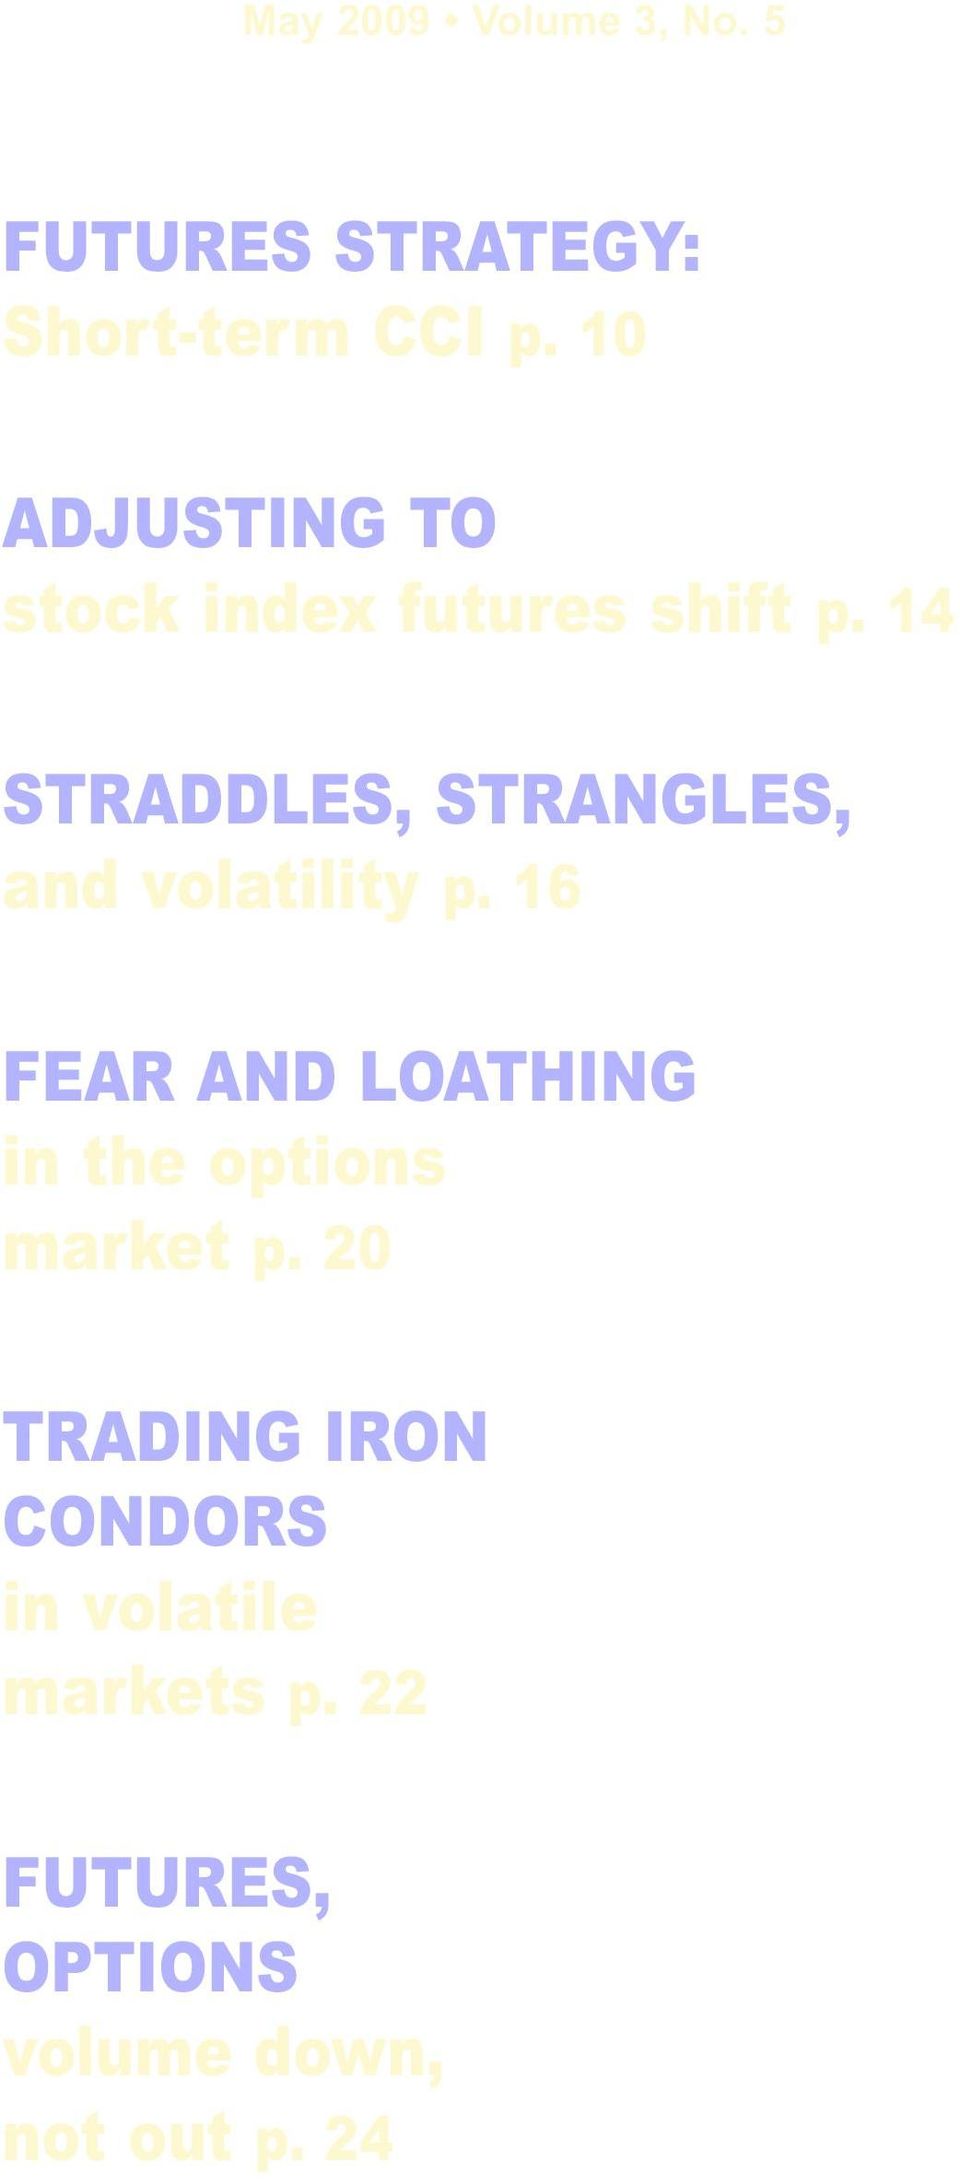 14 STRADDLES, STRANGLES, and volatility p.